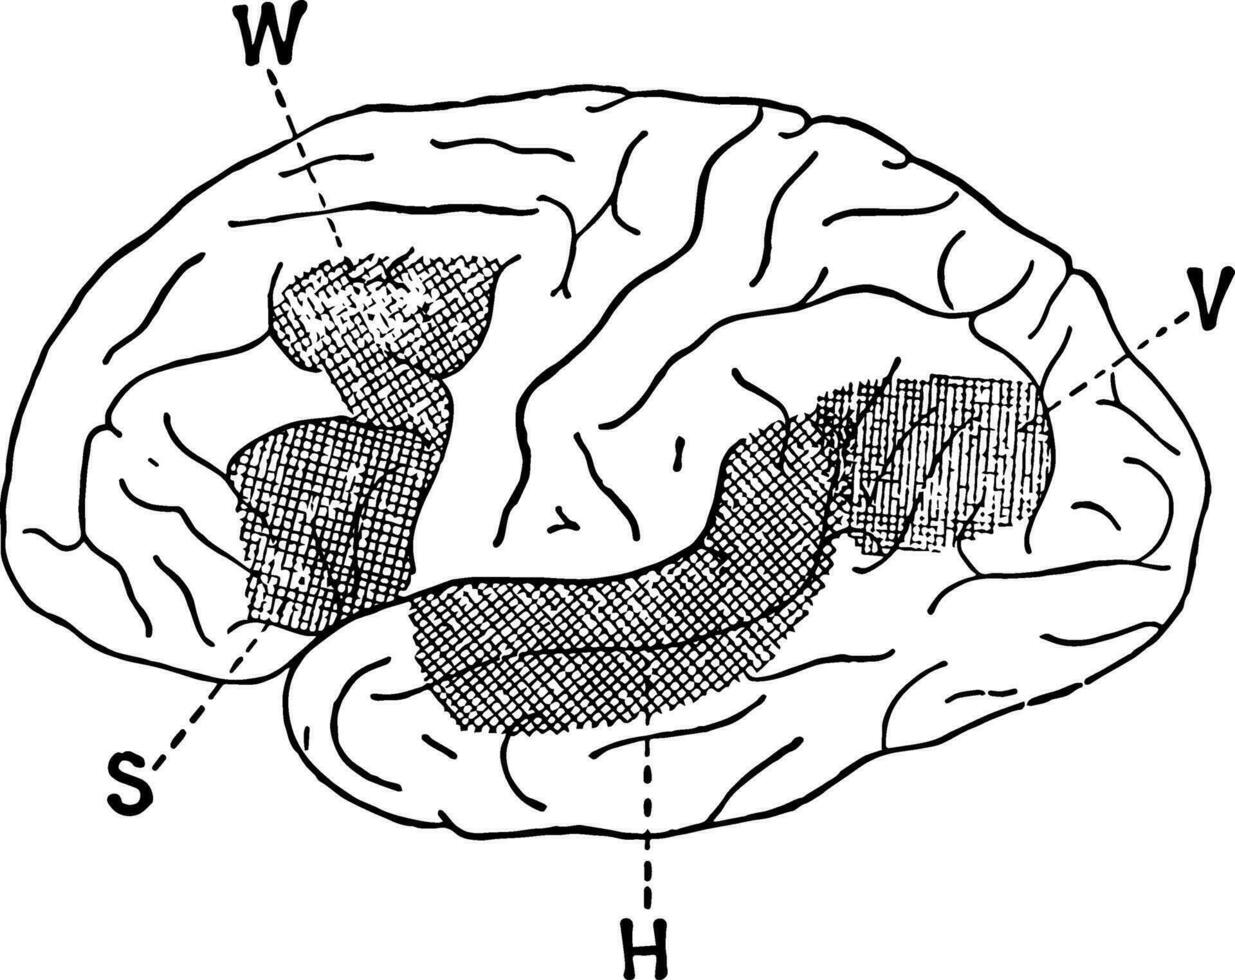 Association Area of the Brain, vintage illustration vector